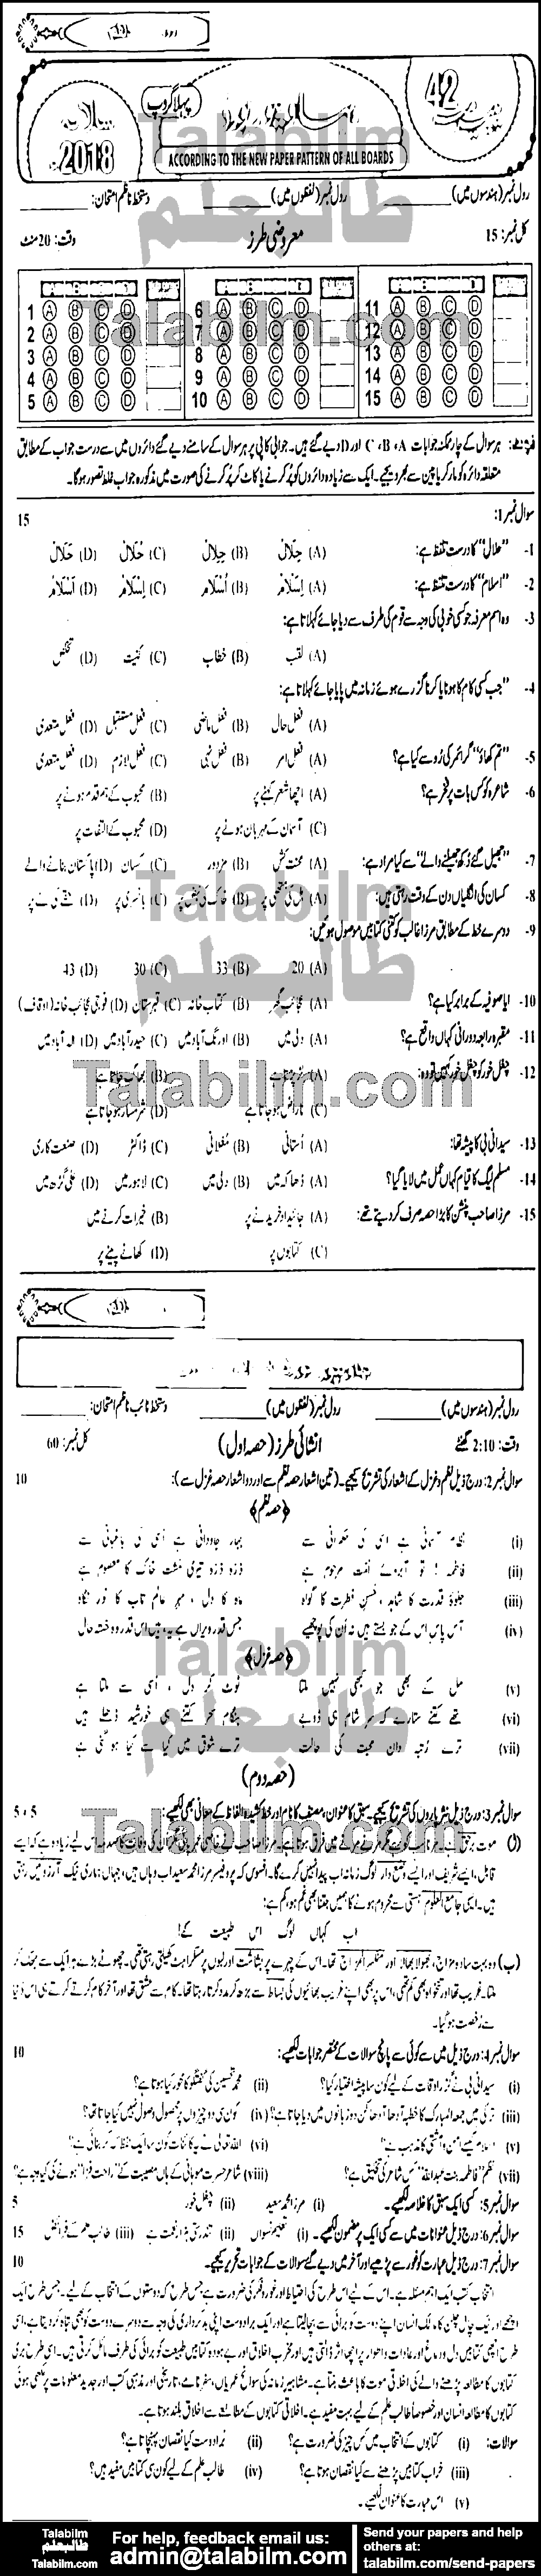 Urdu 0 past paper for 2018 Group-I